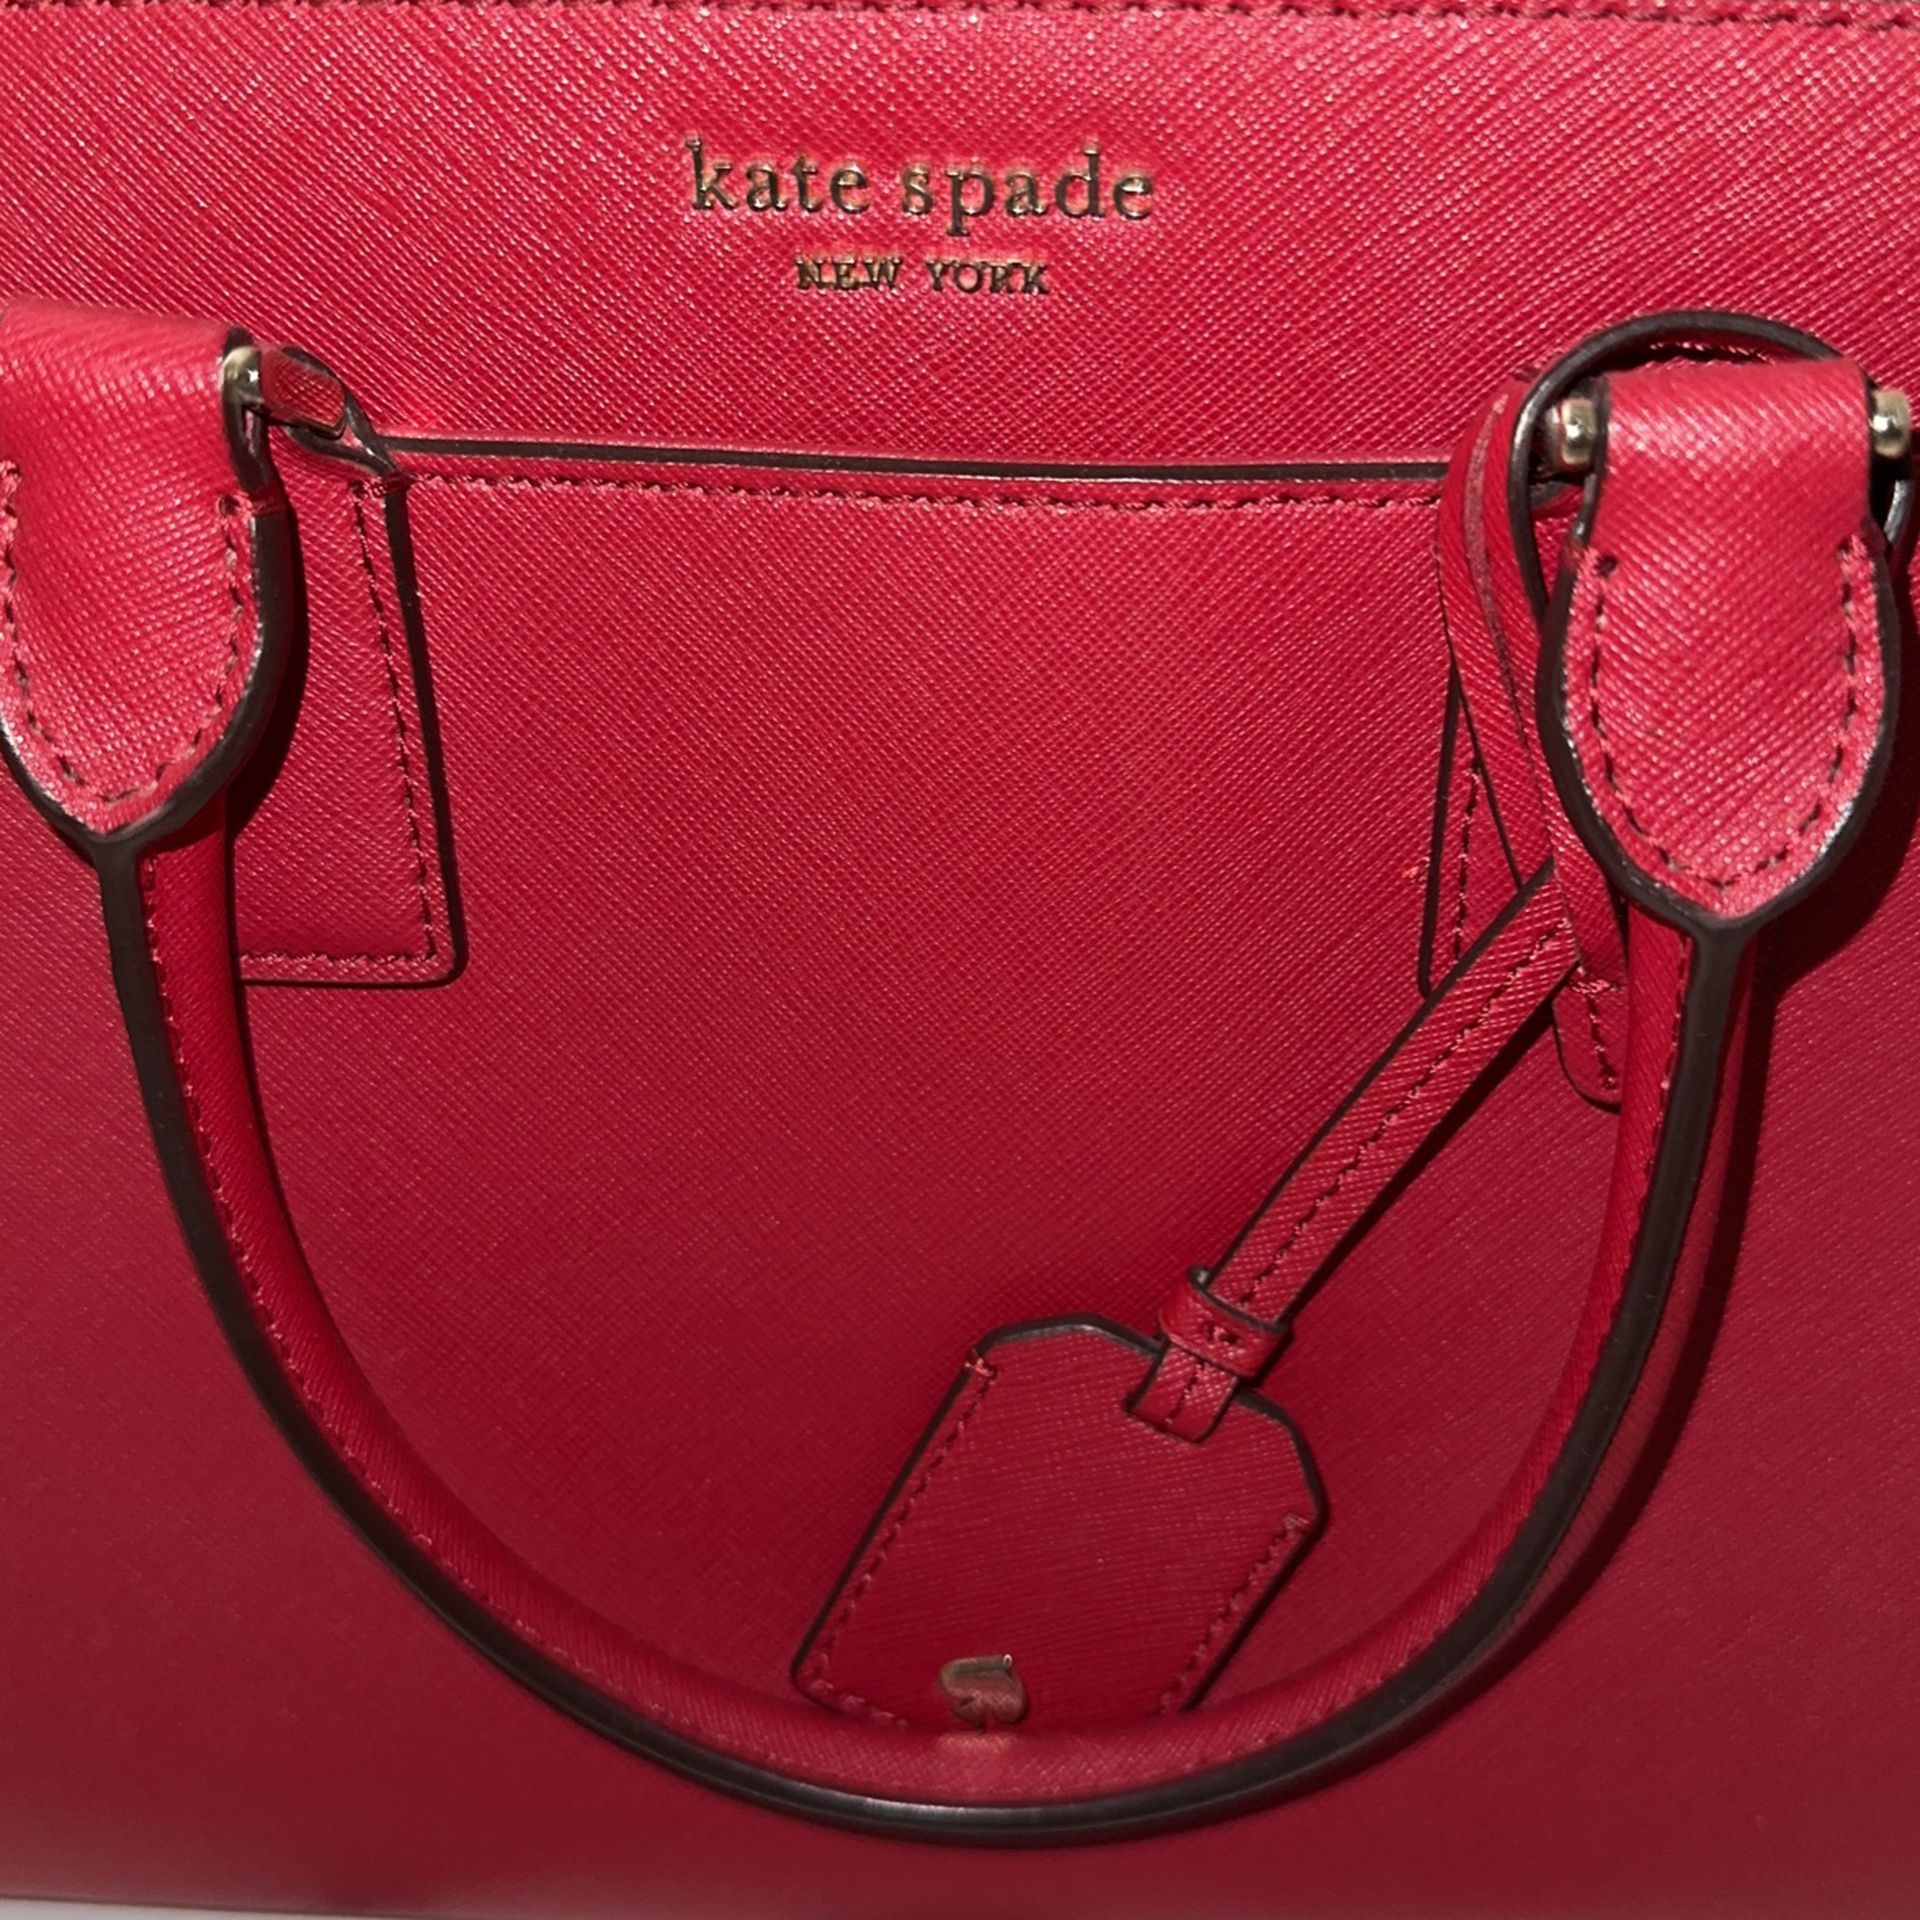 Kate Spade Crossbody Bag for Sale in San Jose, CA - OfferUp